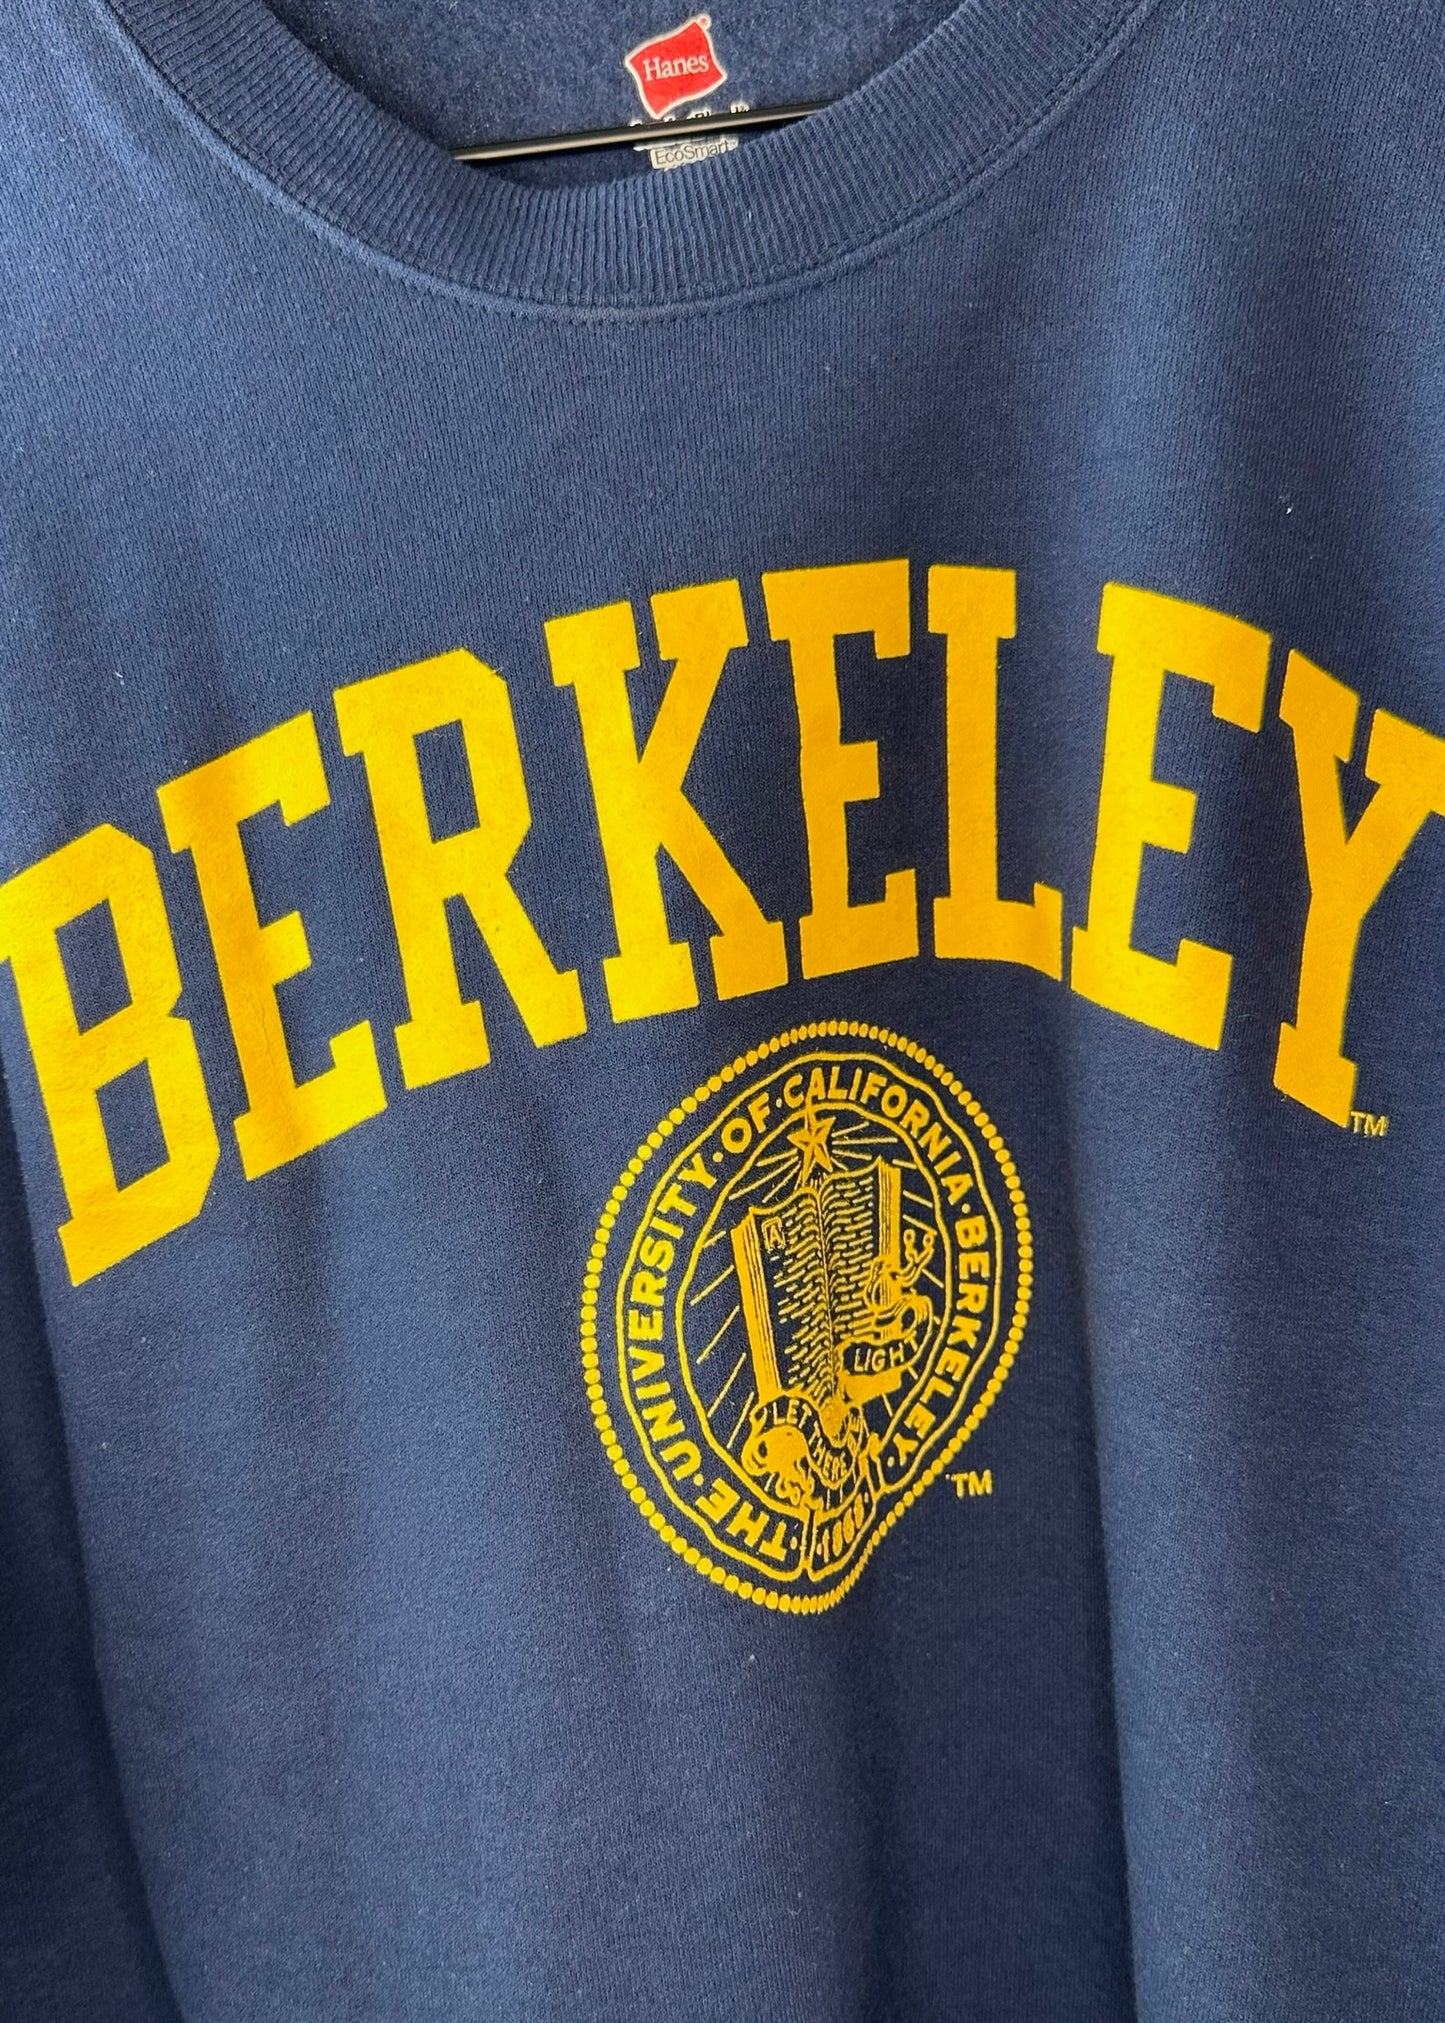 UC Berkeley Sweater